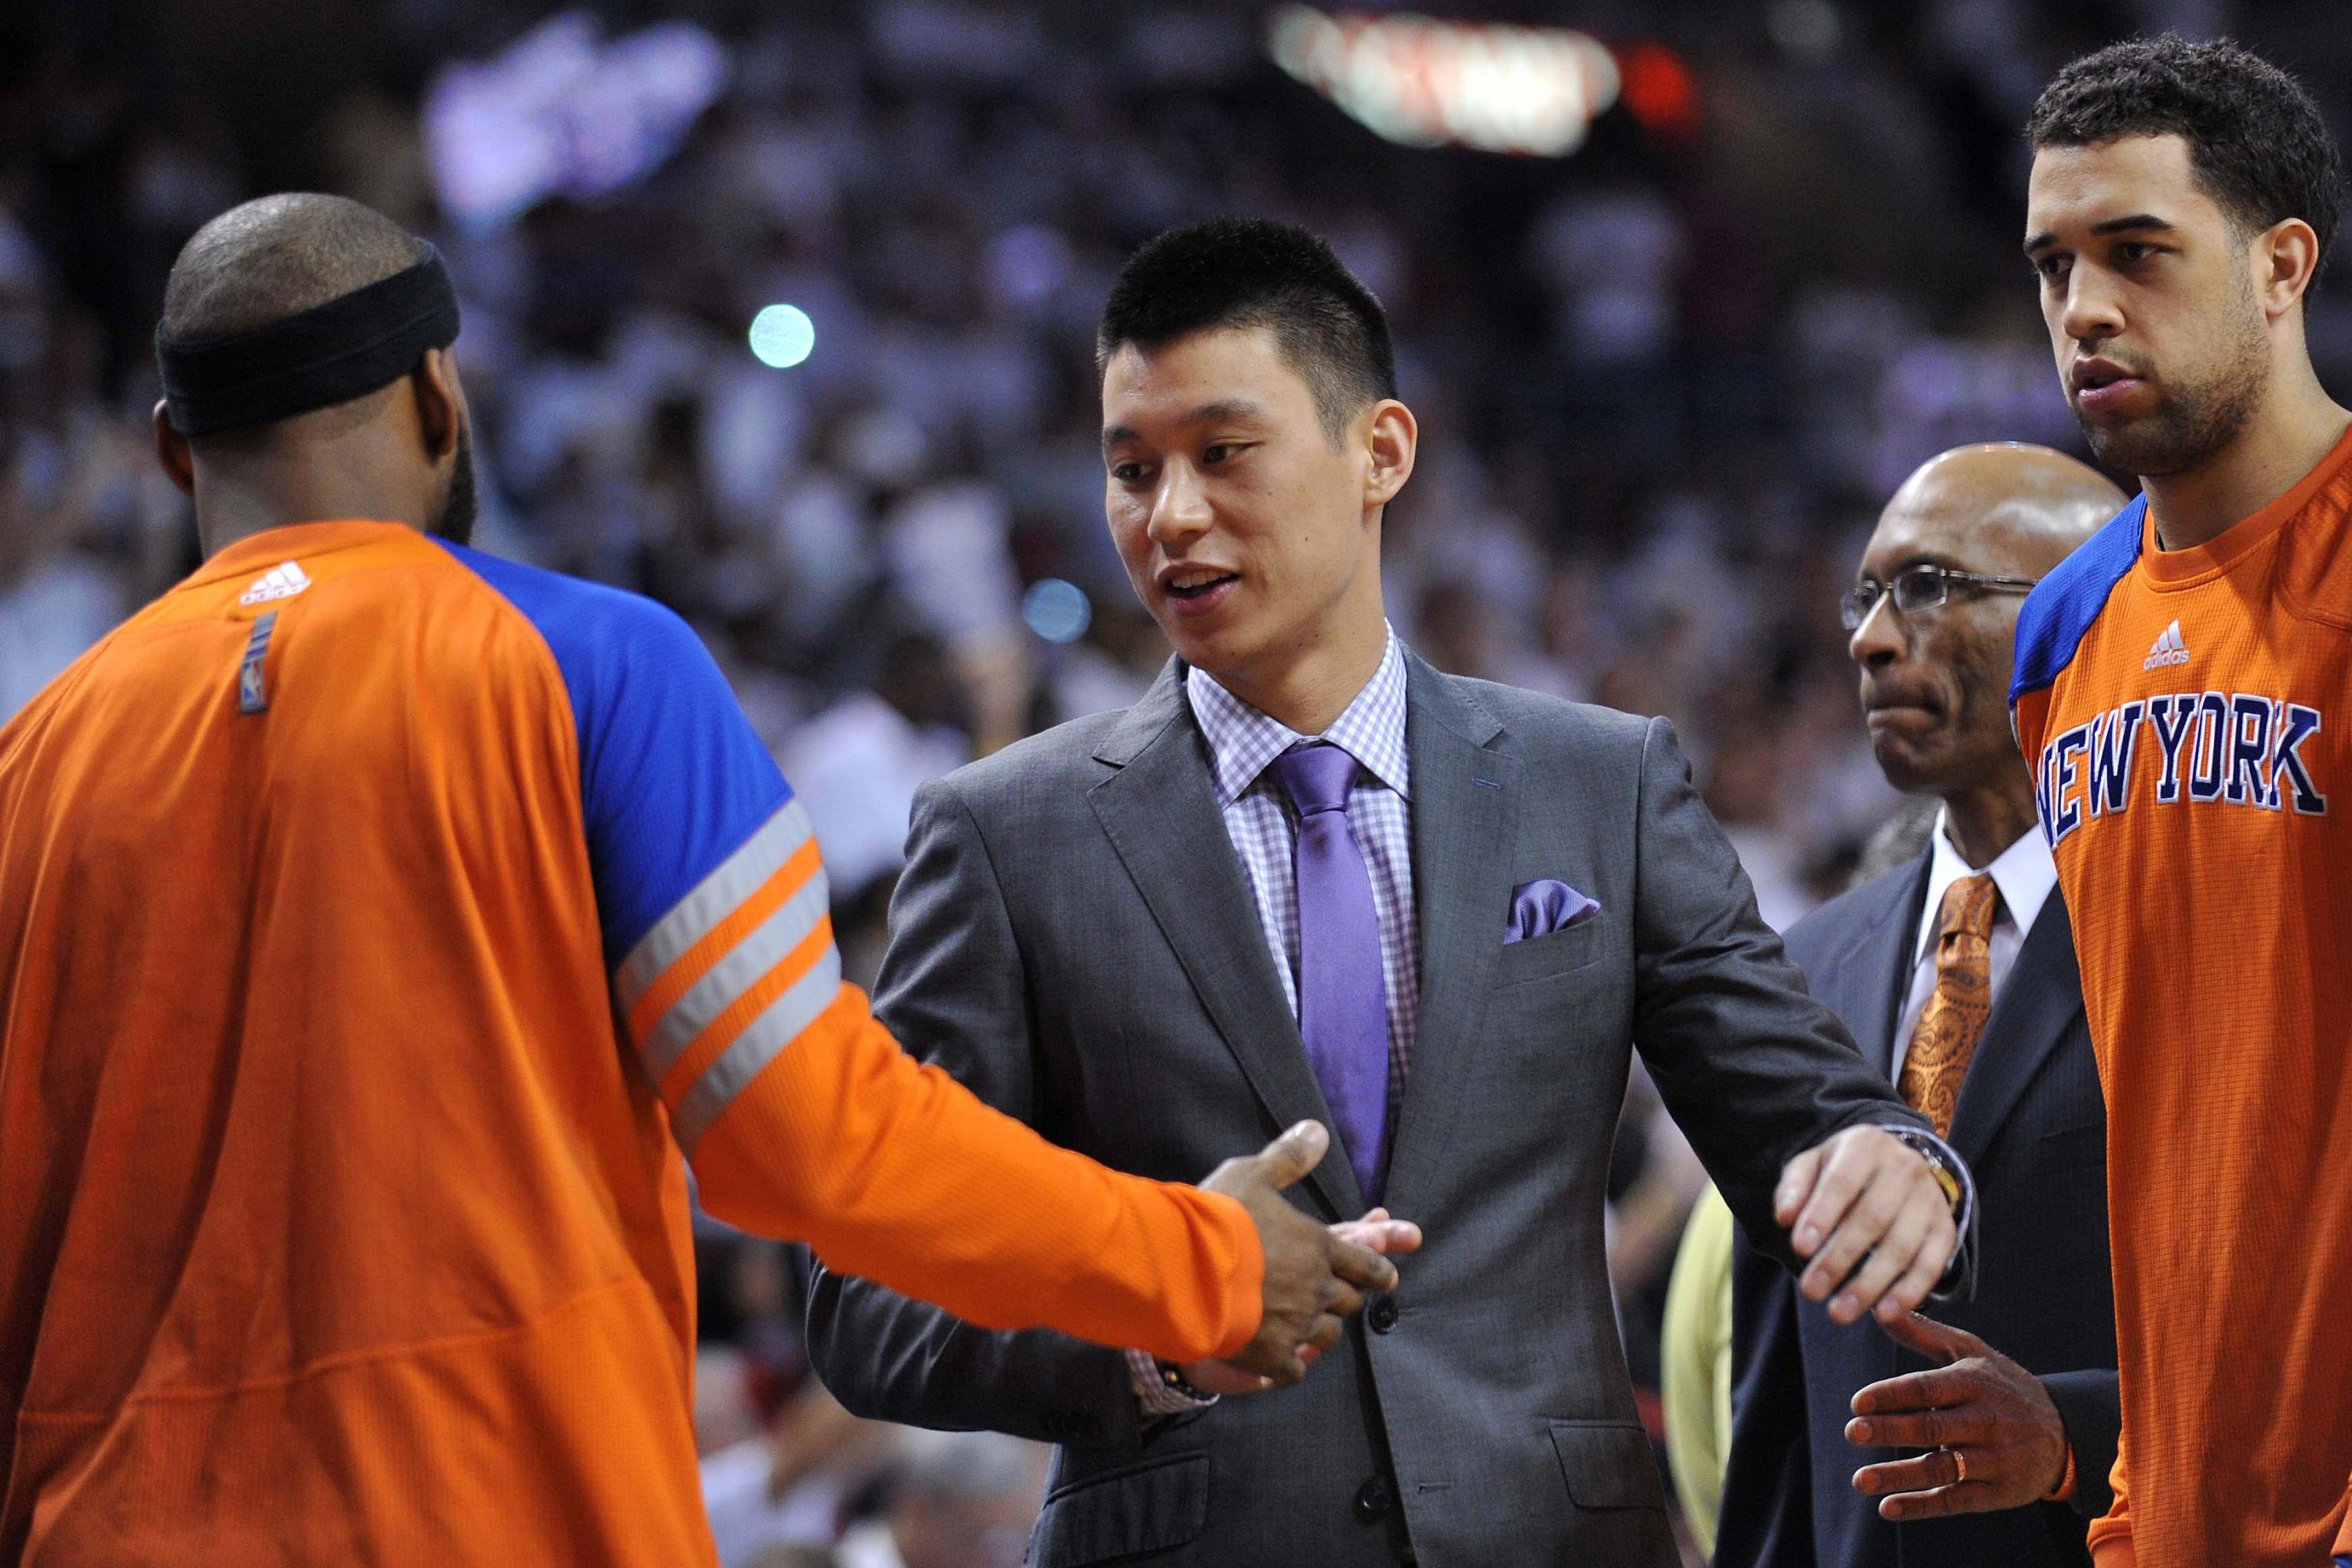 Lin-sanity: New York Knicks' Jeremy Lin was hiding in plain sight